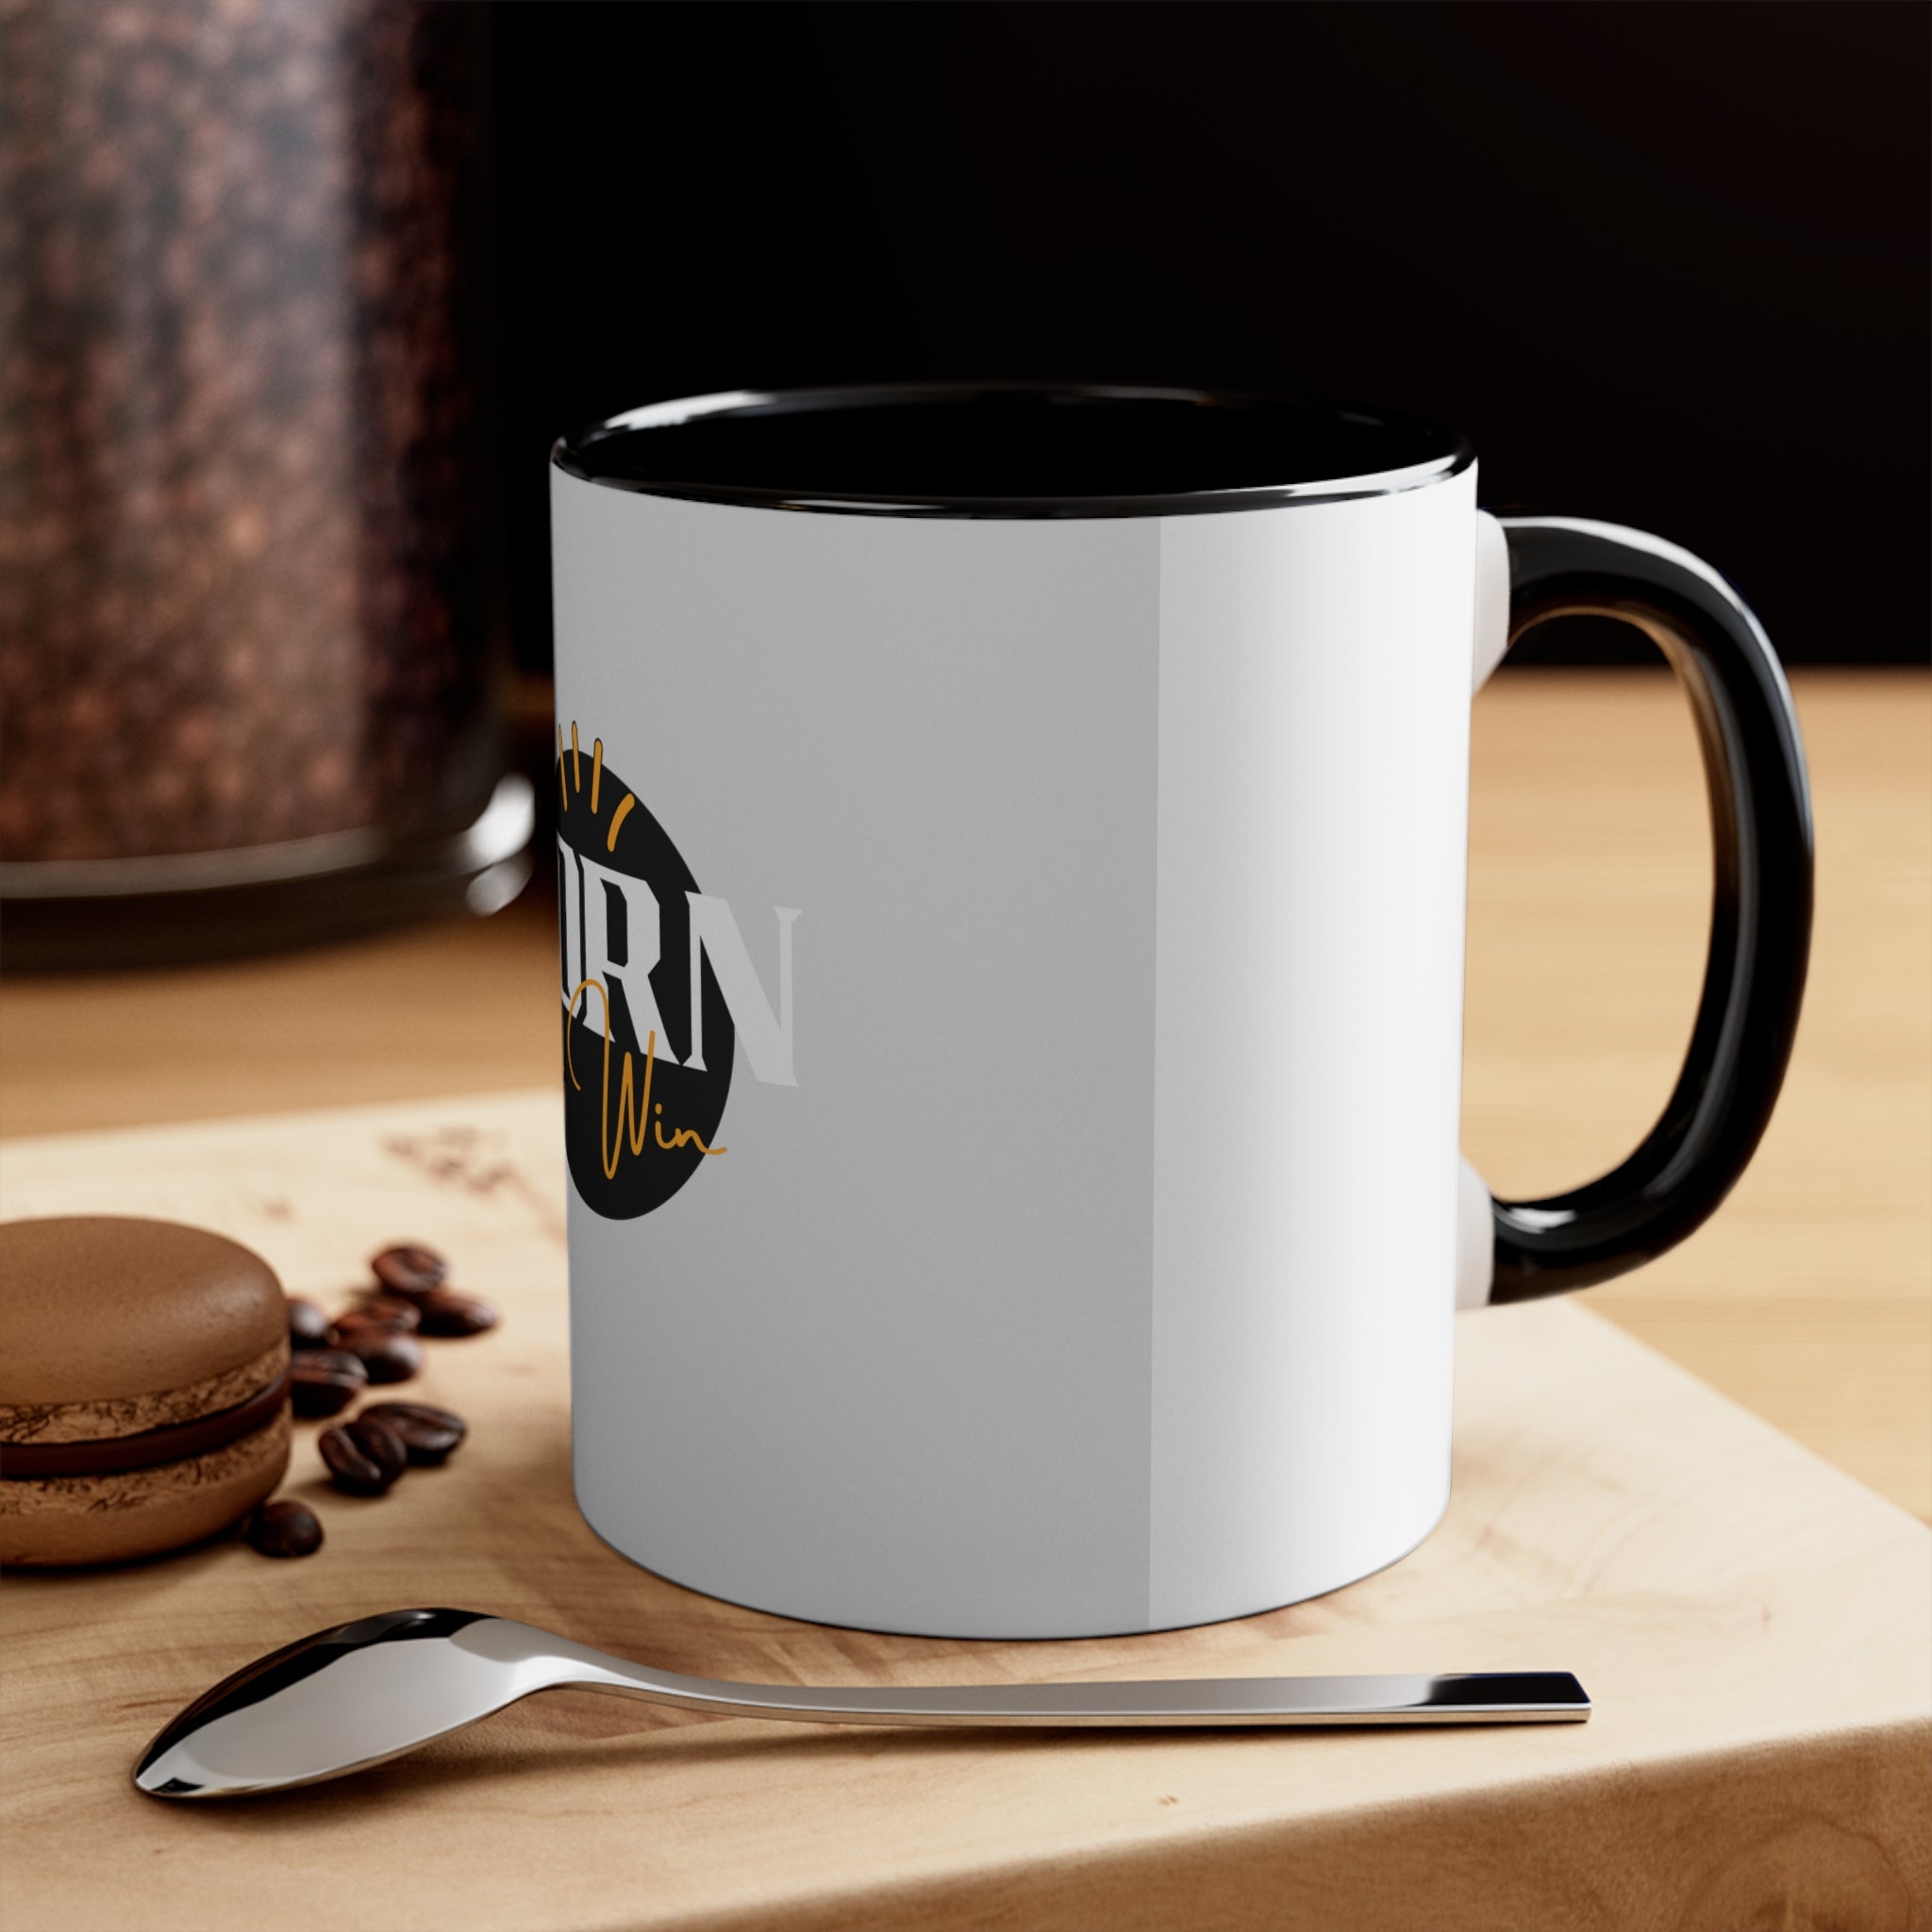 Born To Win Accent Coffee Mug, 11oz